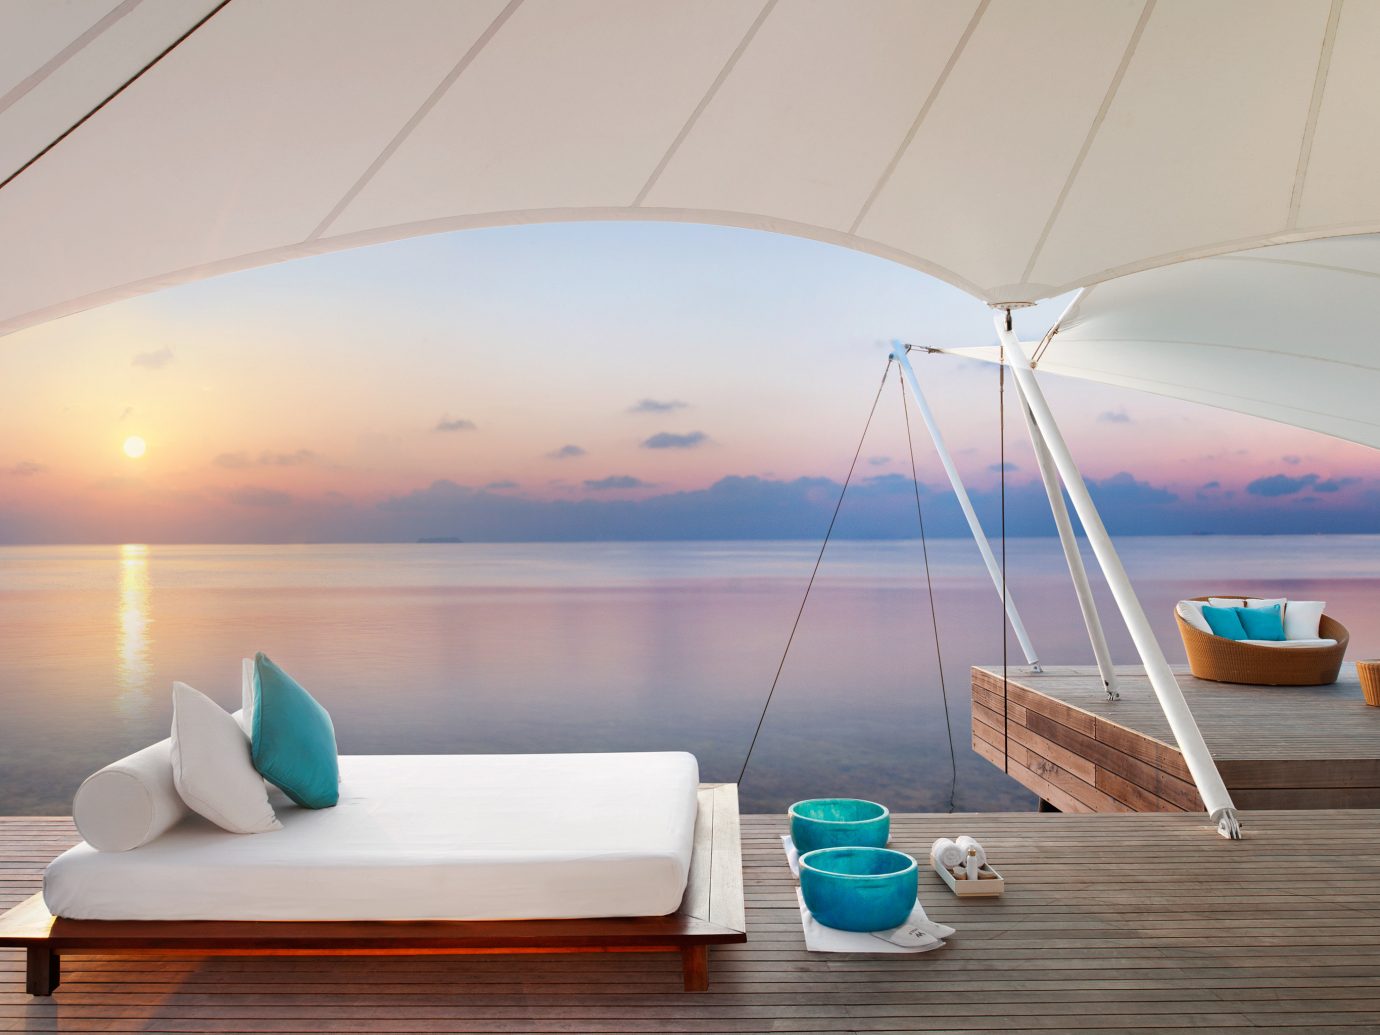 Elegant Living Lounge Luxury Ocean Overwater Bungalow Trip Ideas indoor Boat Architecture yacht lighting interior design ceiling Design swimming pool